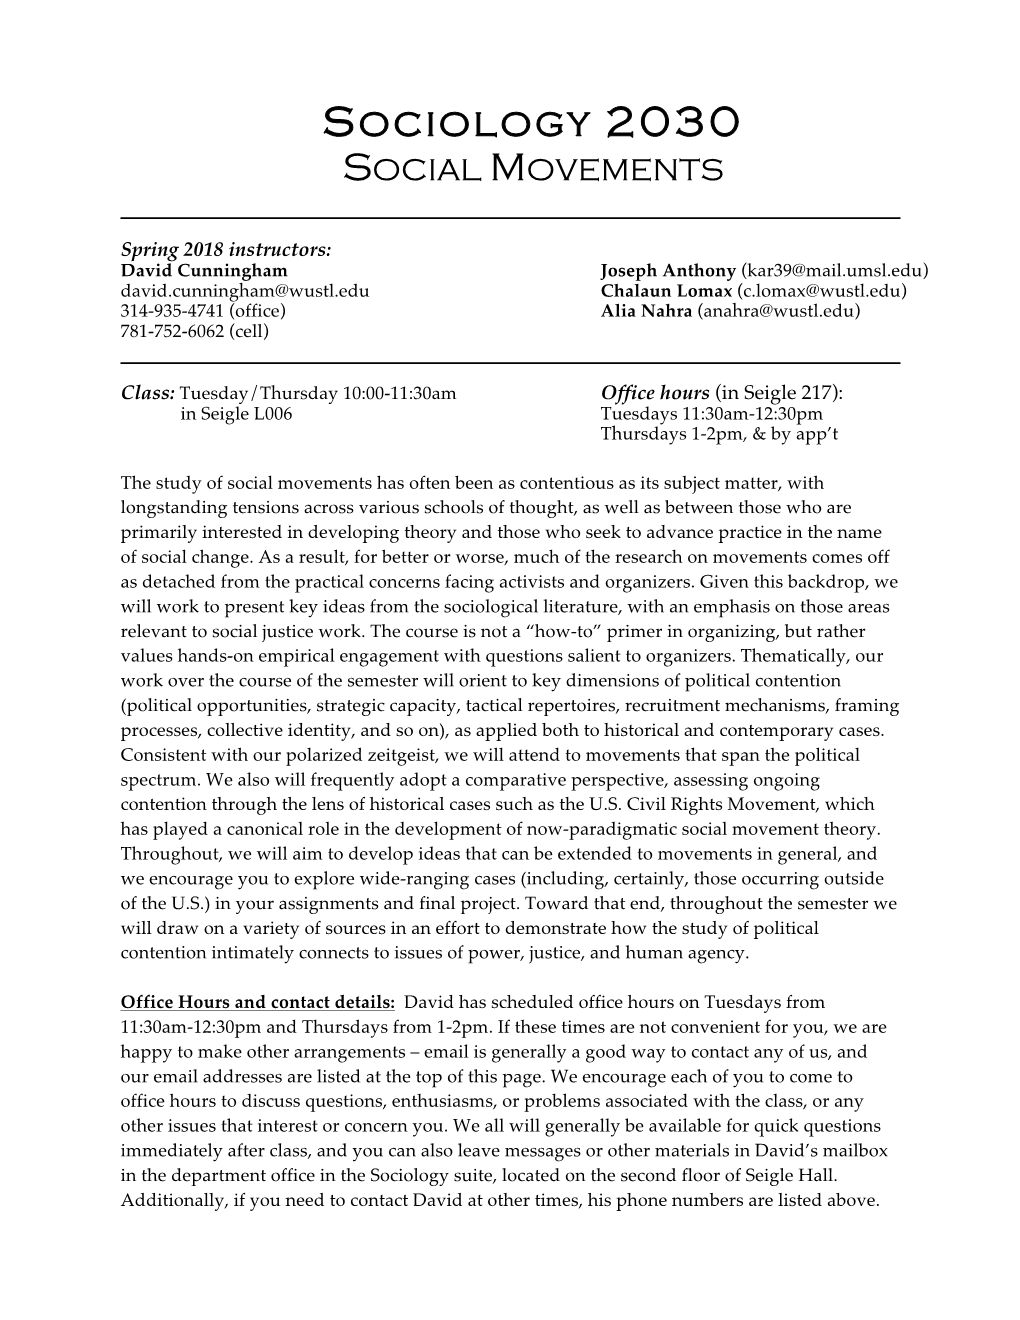 Sociology 2030 Social Movements